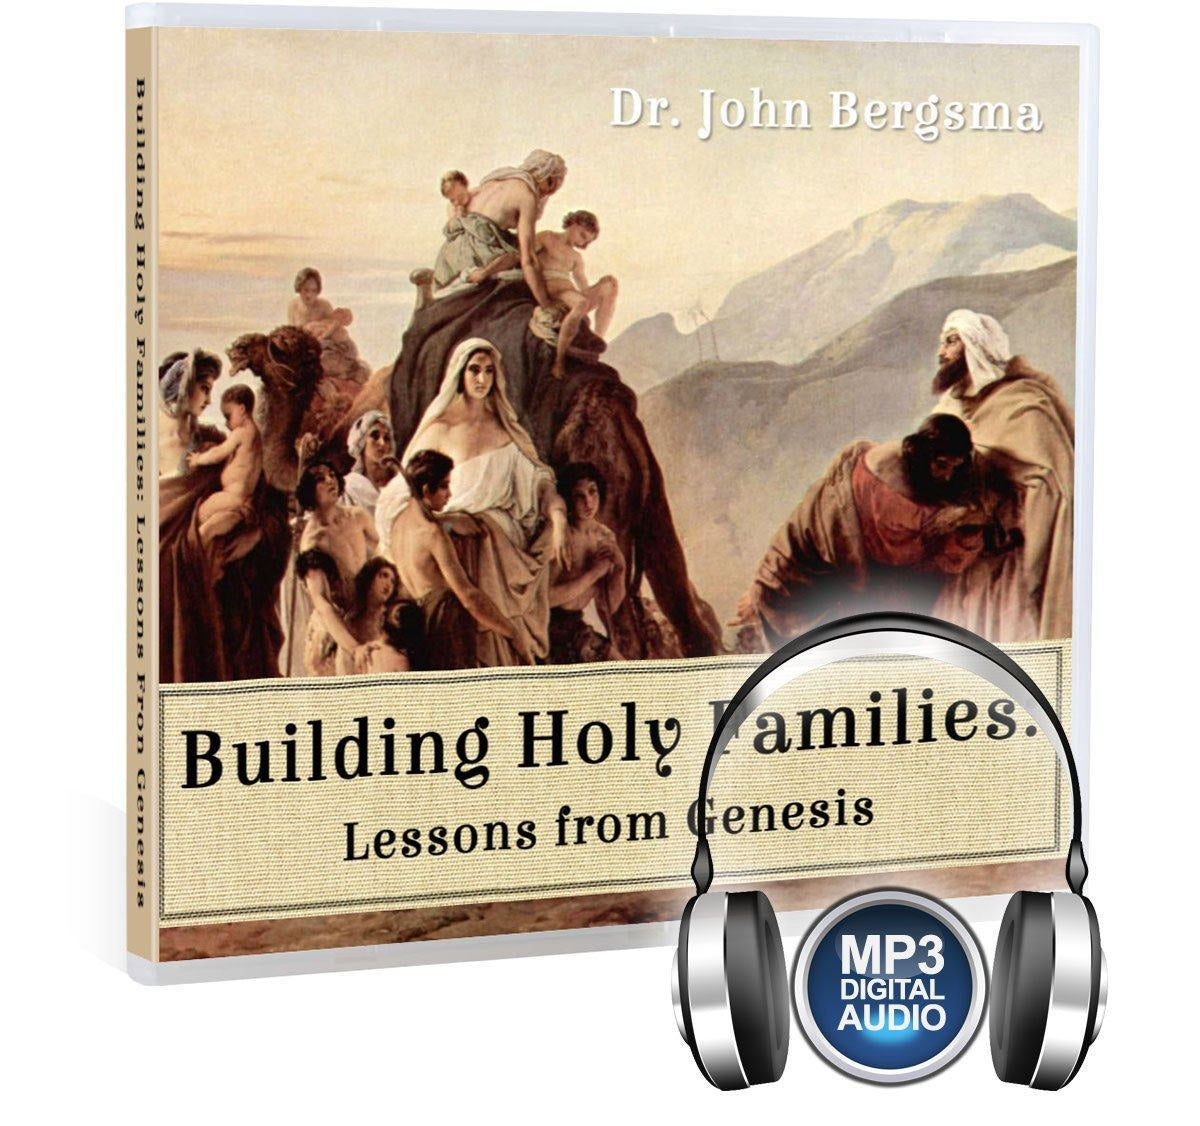 Genesis and family life with Dr. John Bergsma CD